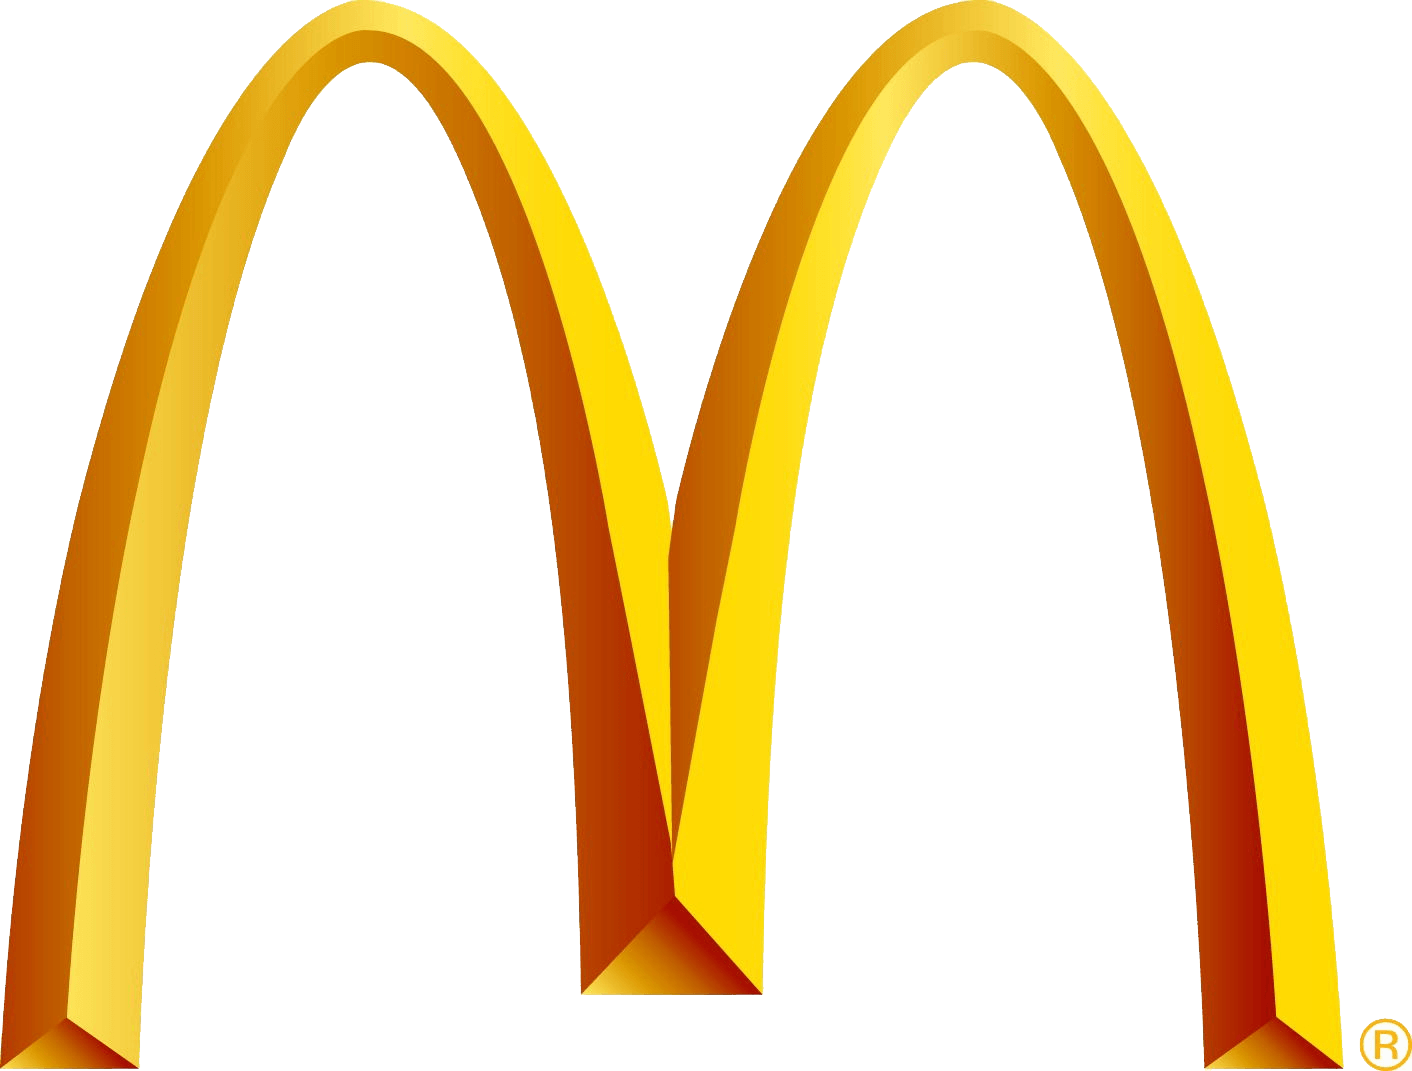 McDonald's Logo - McDonald's logo PNG images free download